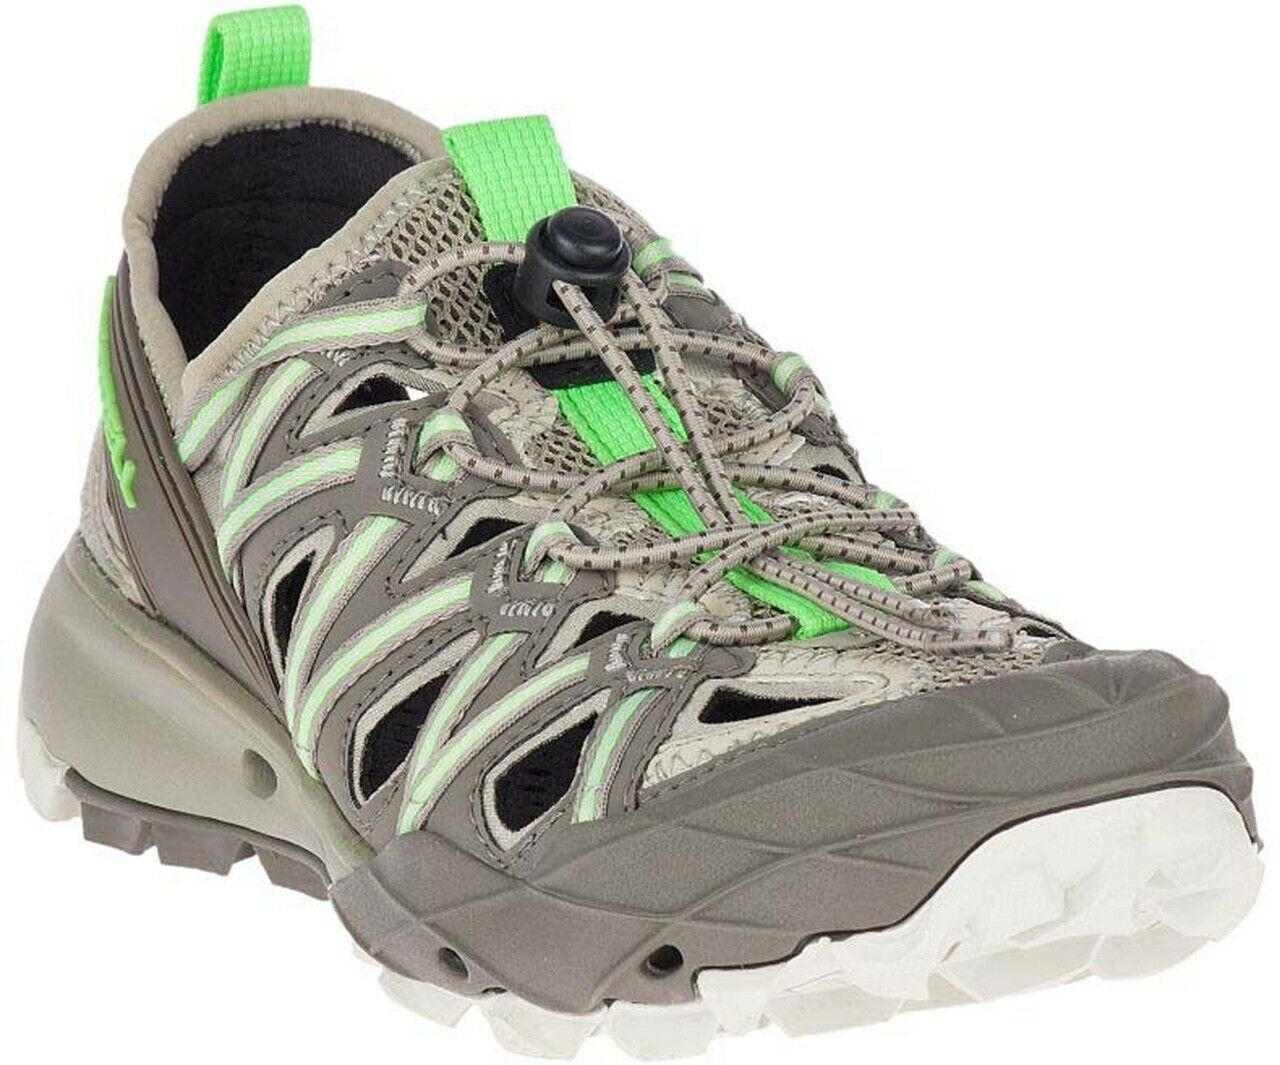 Merrell Choprock Brindle Women's Hiking Shoes - NEW - Size US 7 M